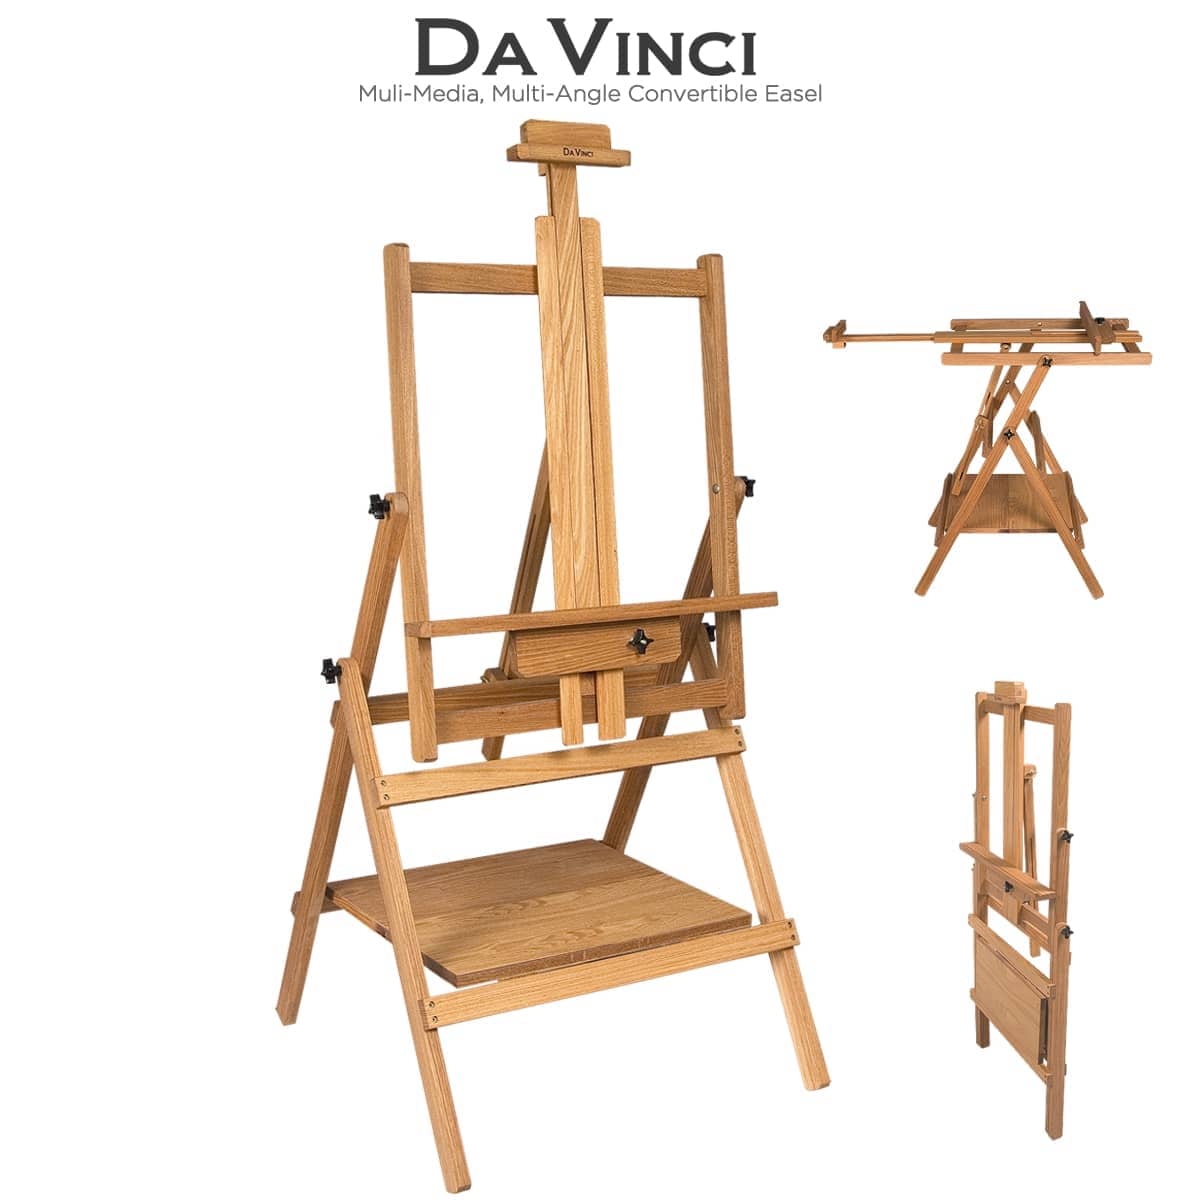 Da Vinci Multimedia Multi-Angle Convertible Easel